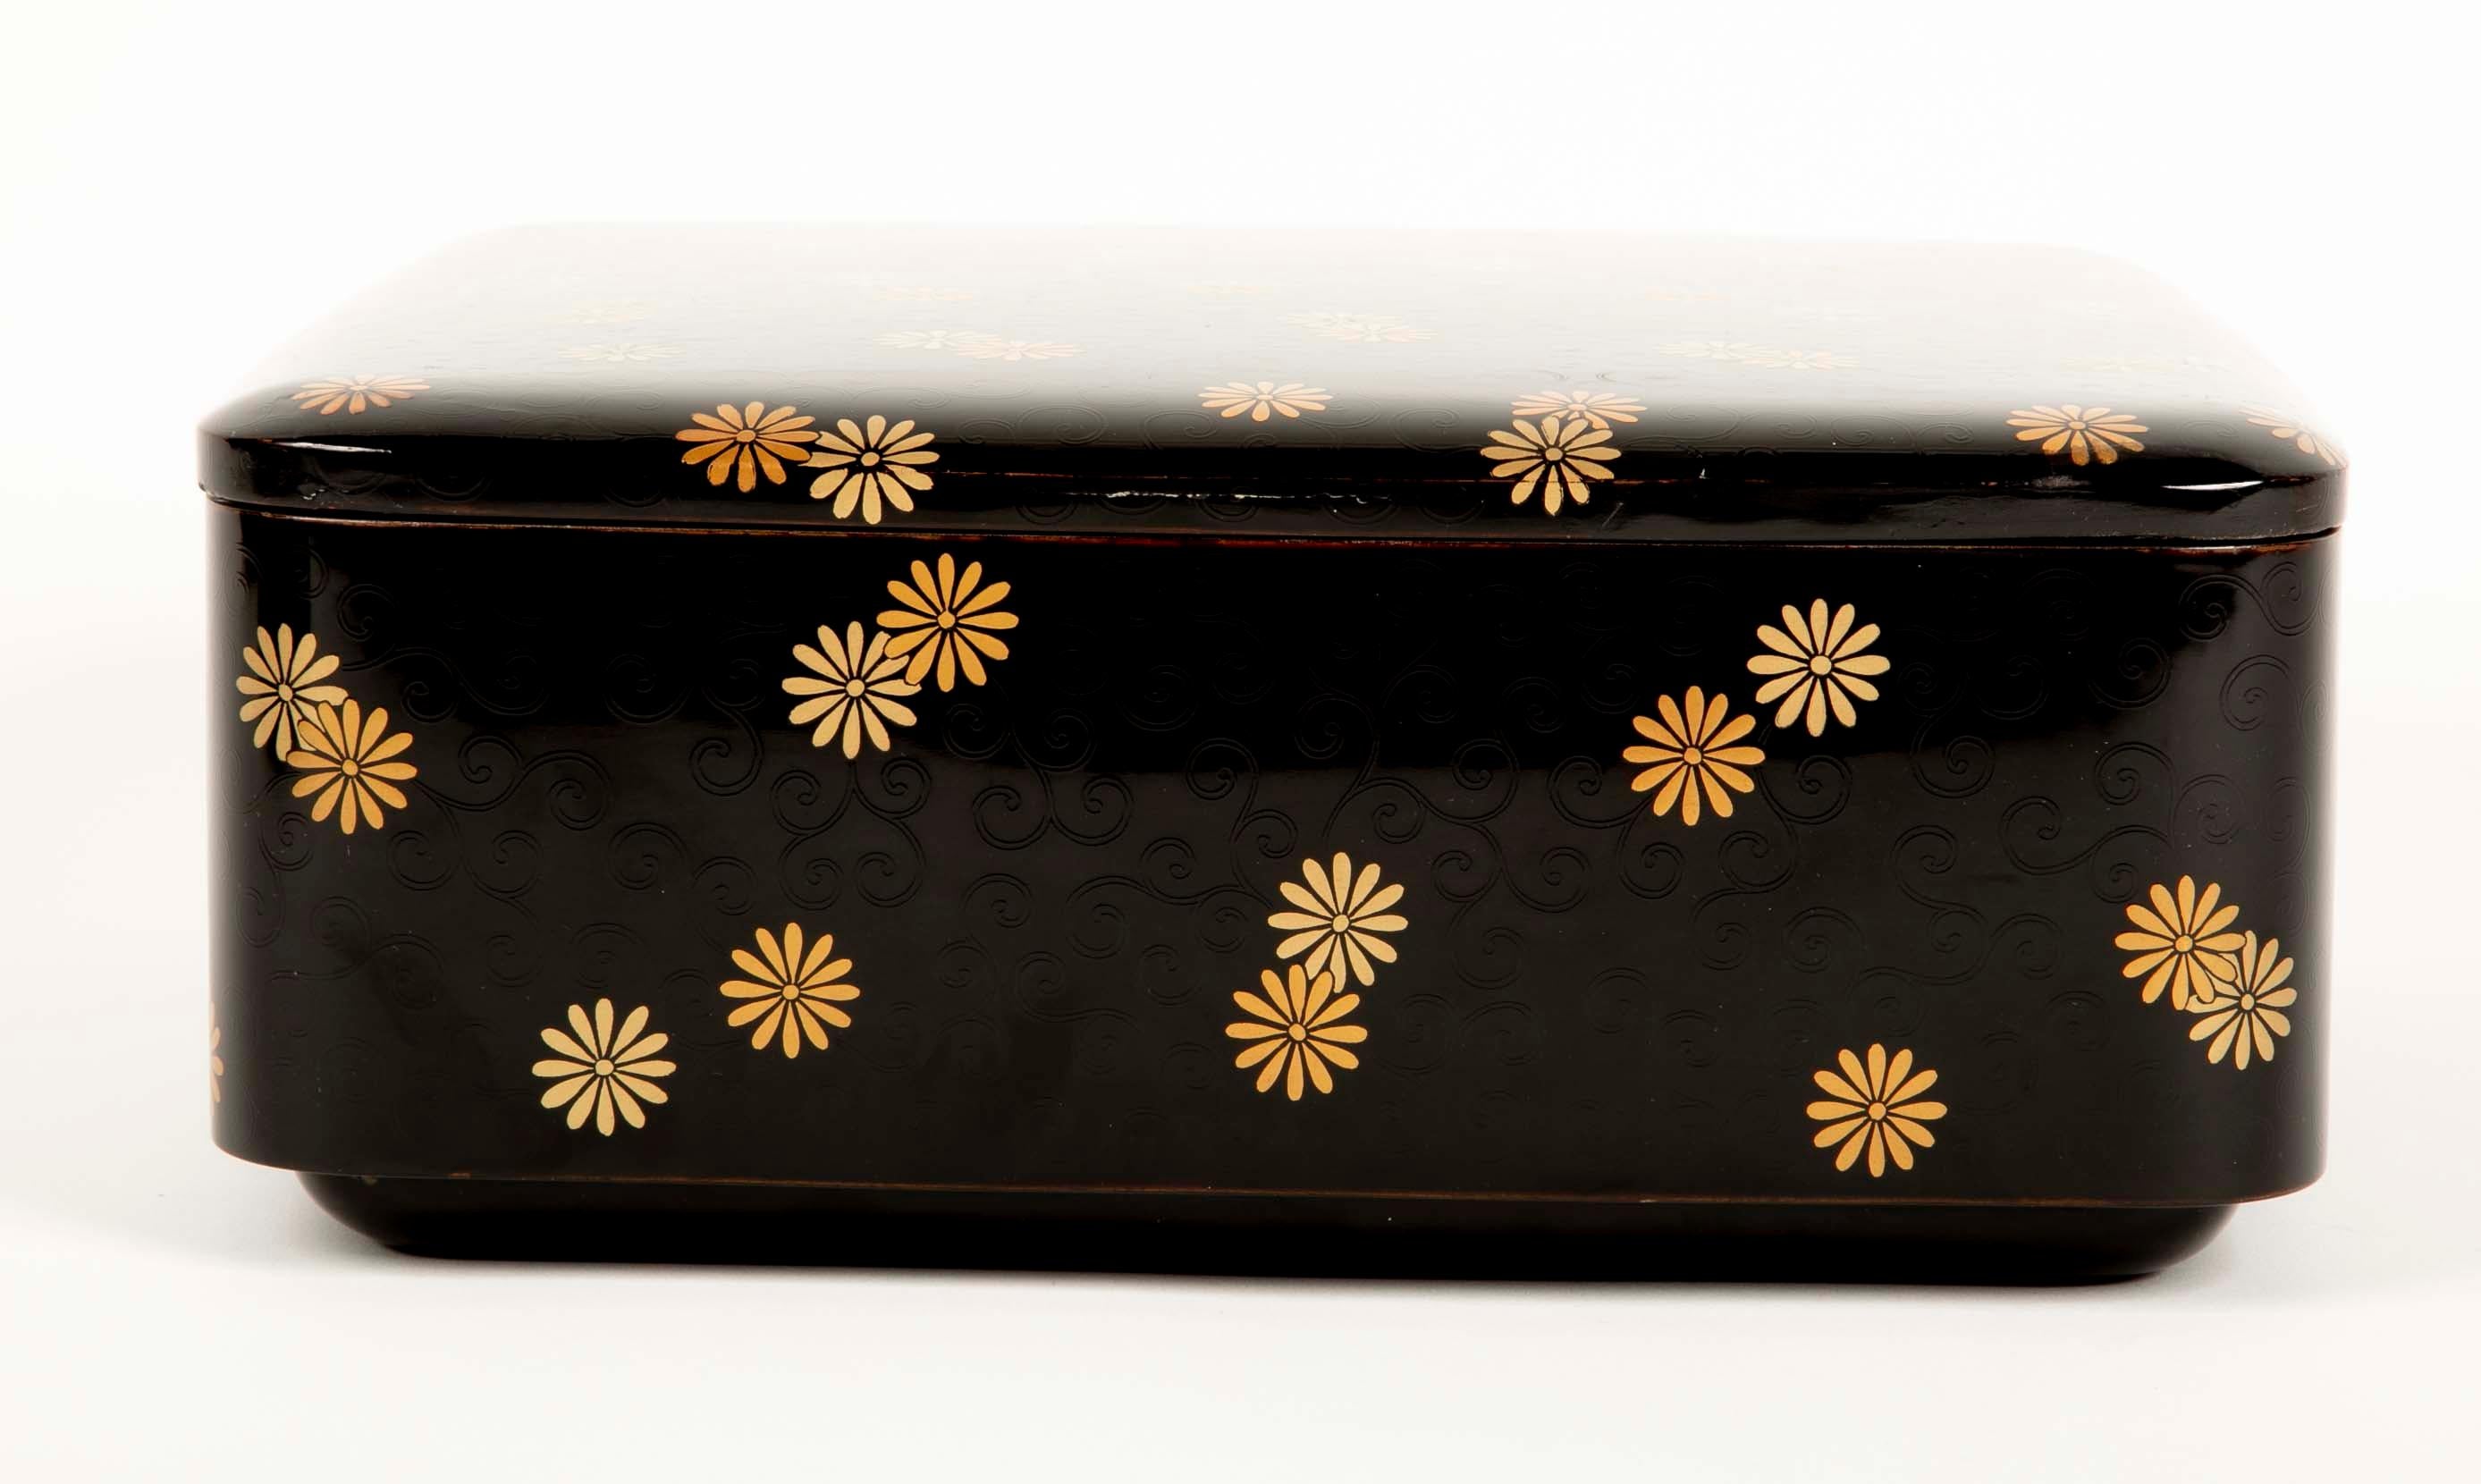 Japanese Ryoshibako Document Box of Black Lacquer with Gold Chrysanthemum Decoration